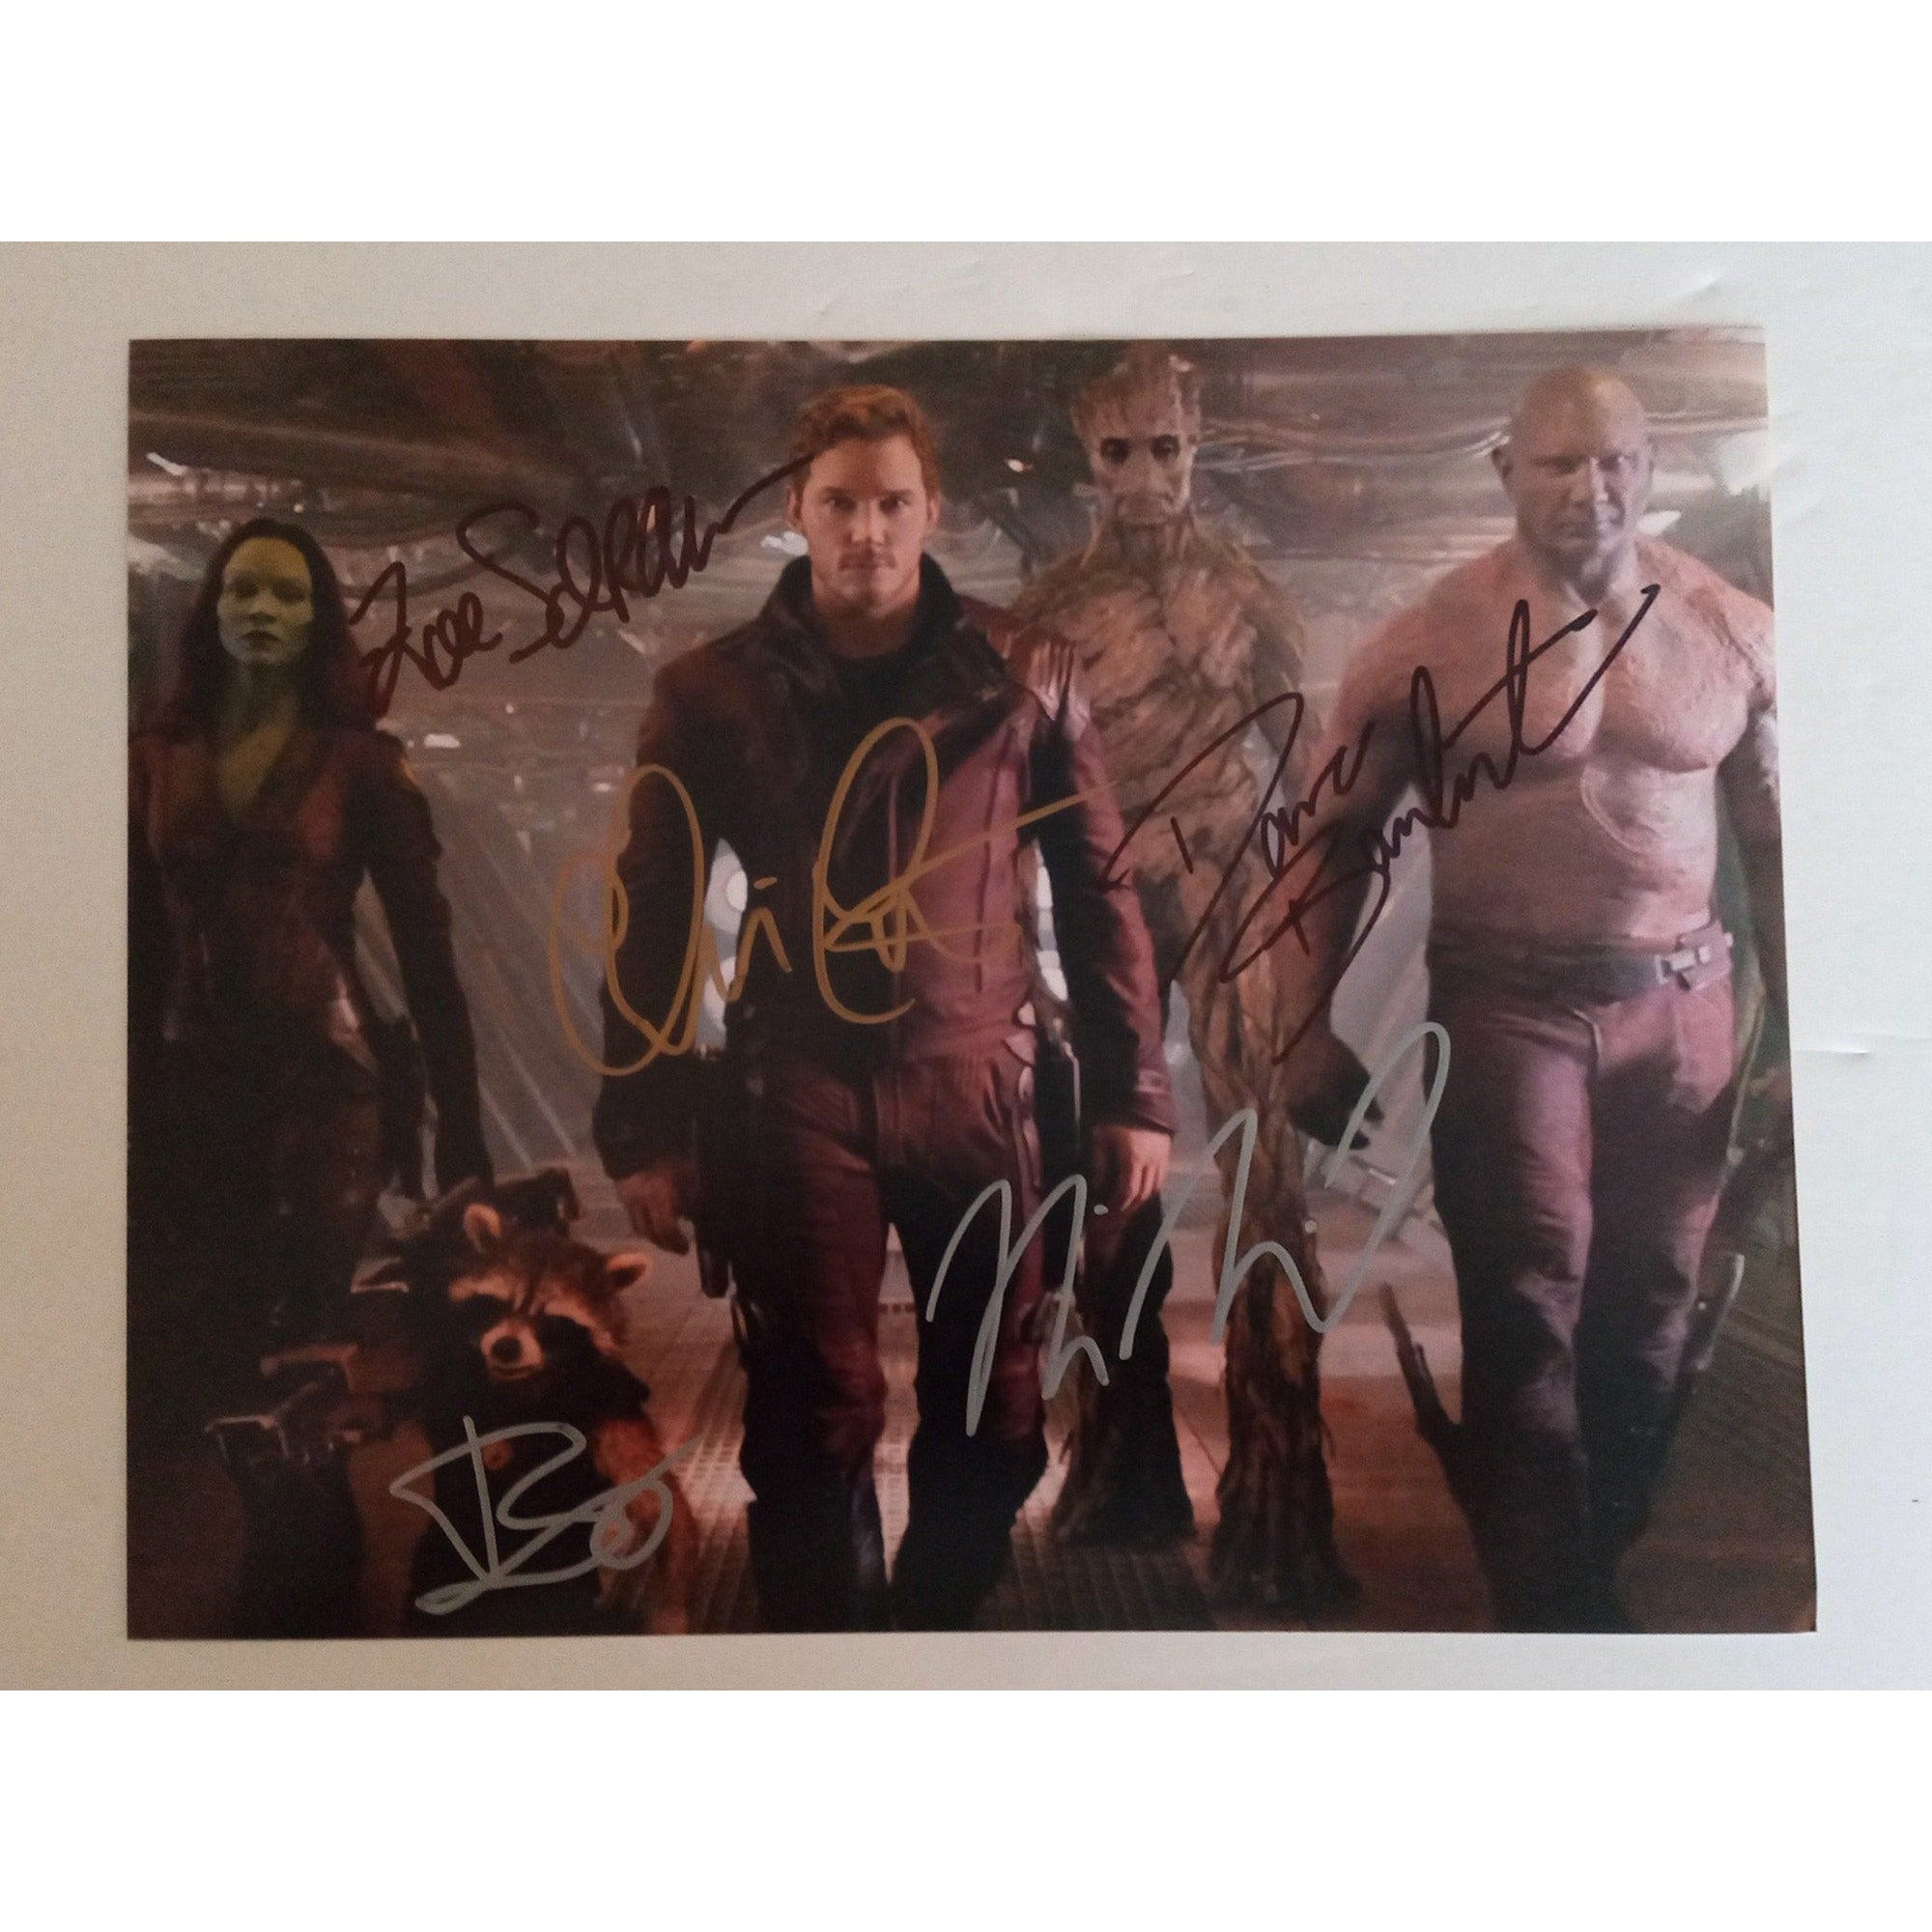 Guardians of the Galaxy Zoe Saldana, Chris Pratt, Dave Bautista, Vin Diesel, Bradley Cooper 8 by 10 signed photo with proof